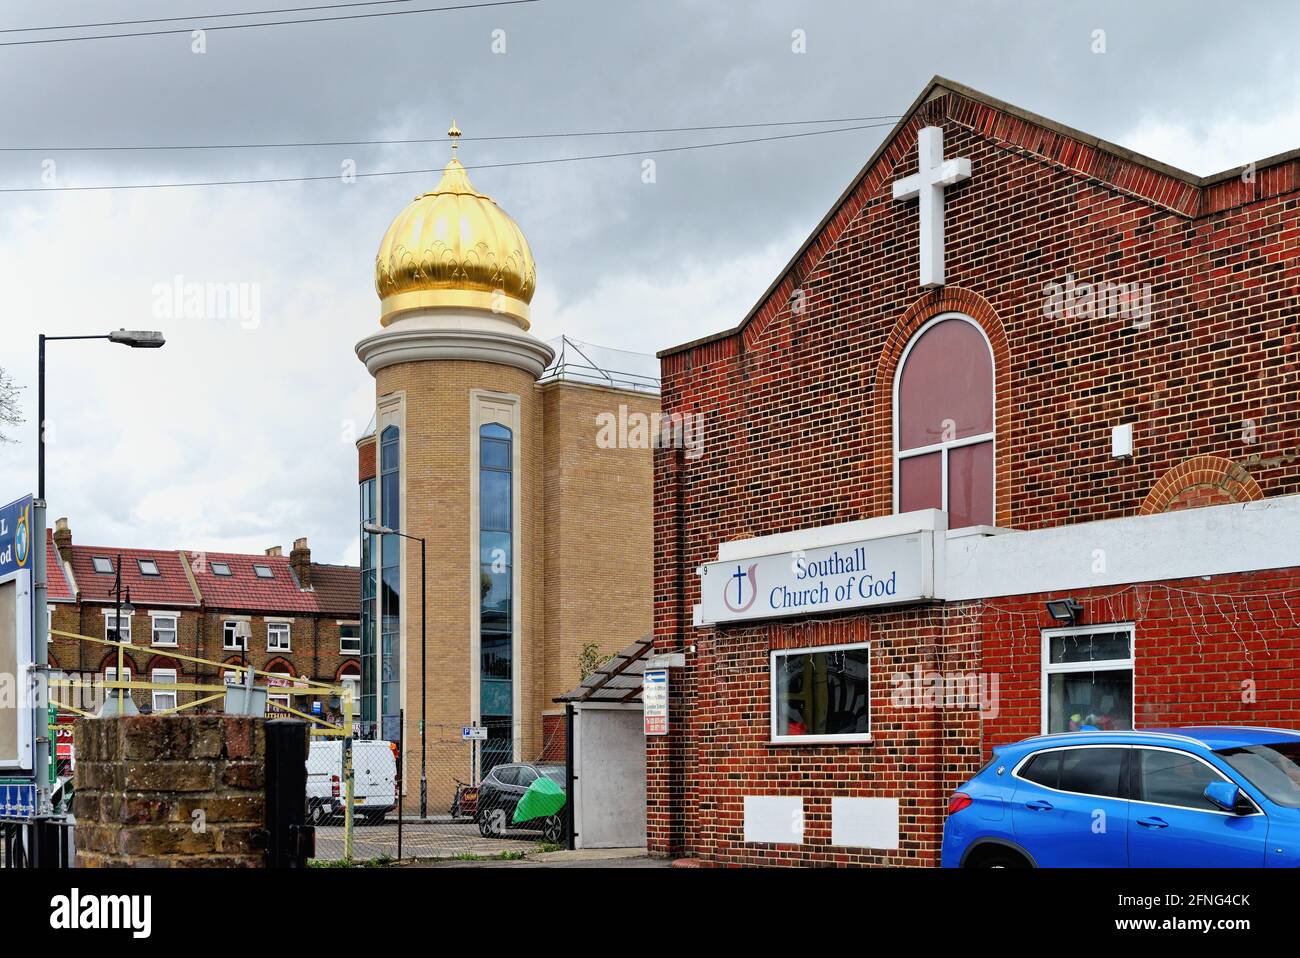 La cupola dorata del tempio Sikh Gurdwara Guru Nanak Darber in Kings Road Southall London Borough of Ealing England REGNO UNITO Foto Stock